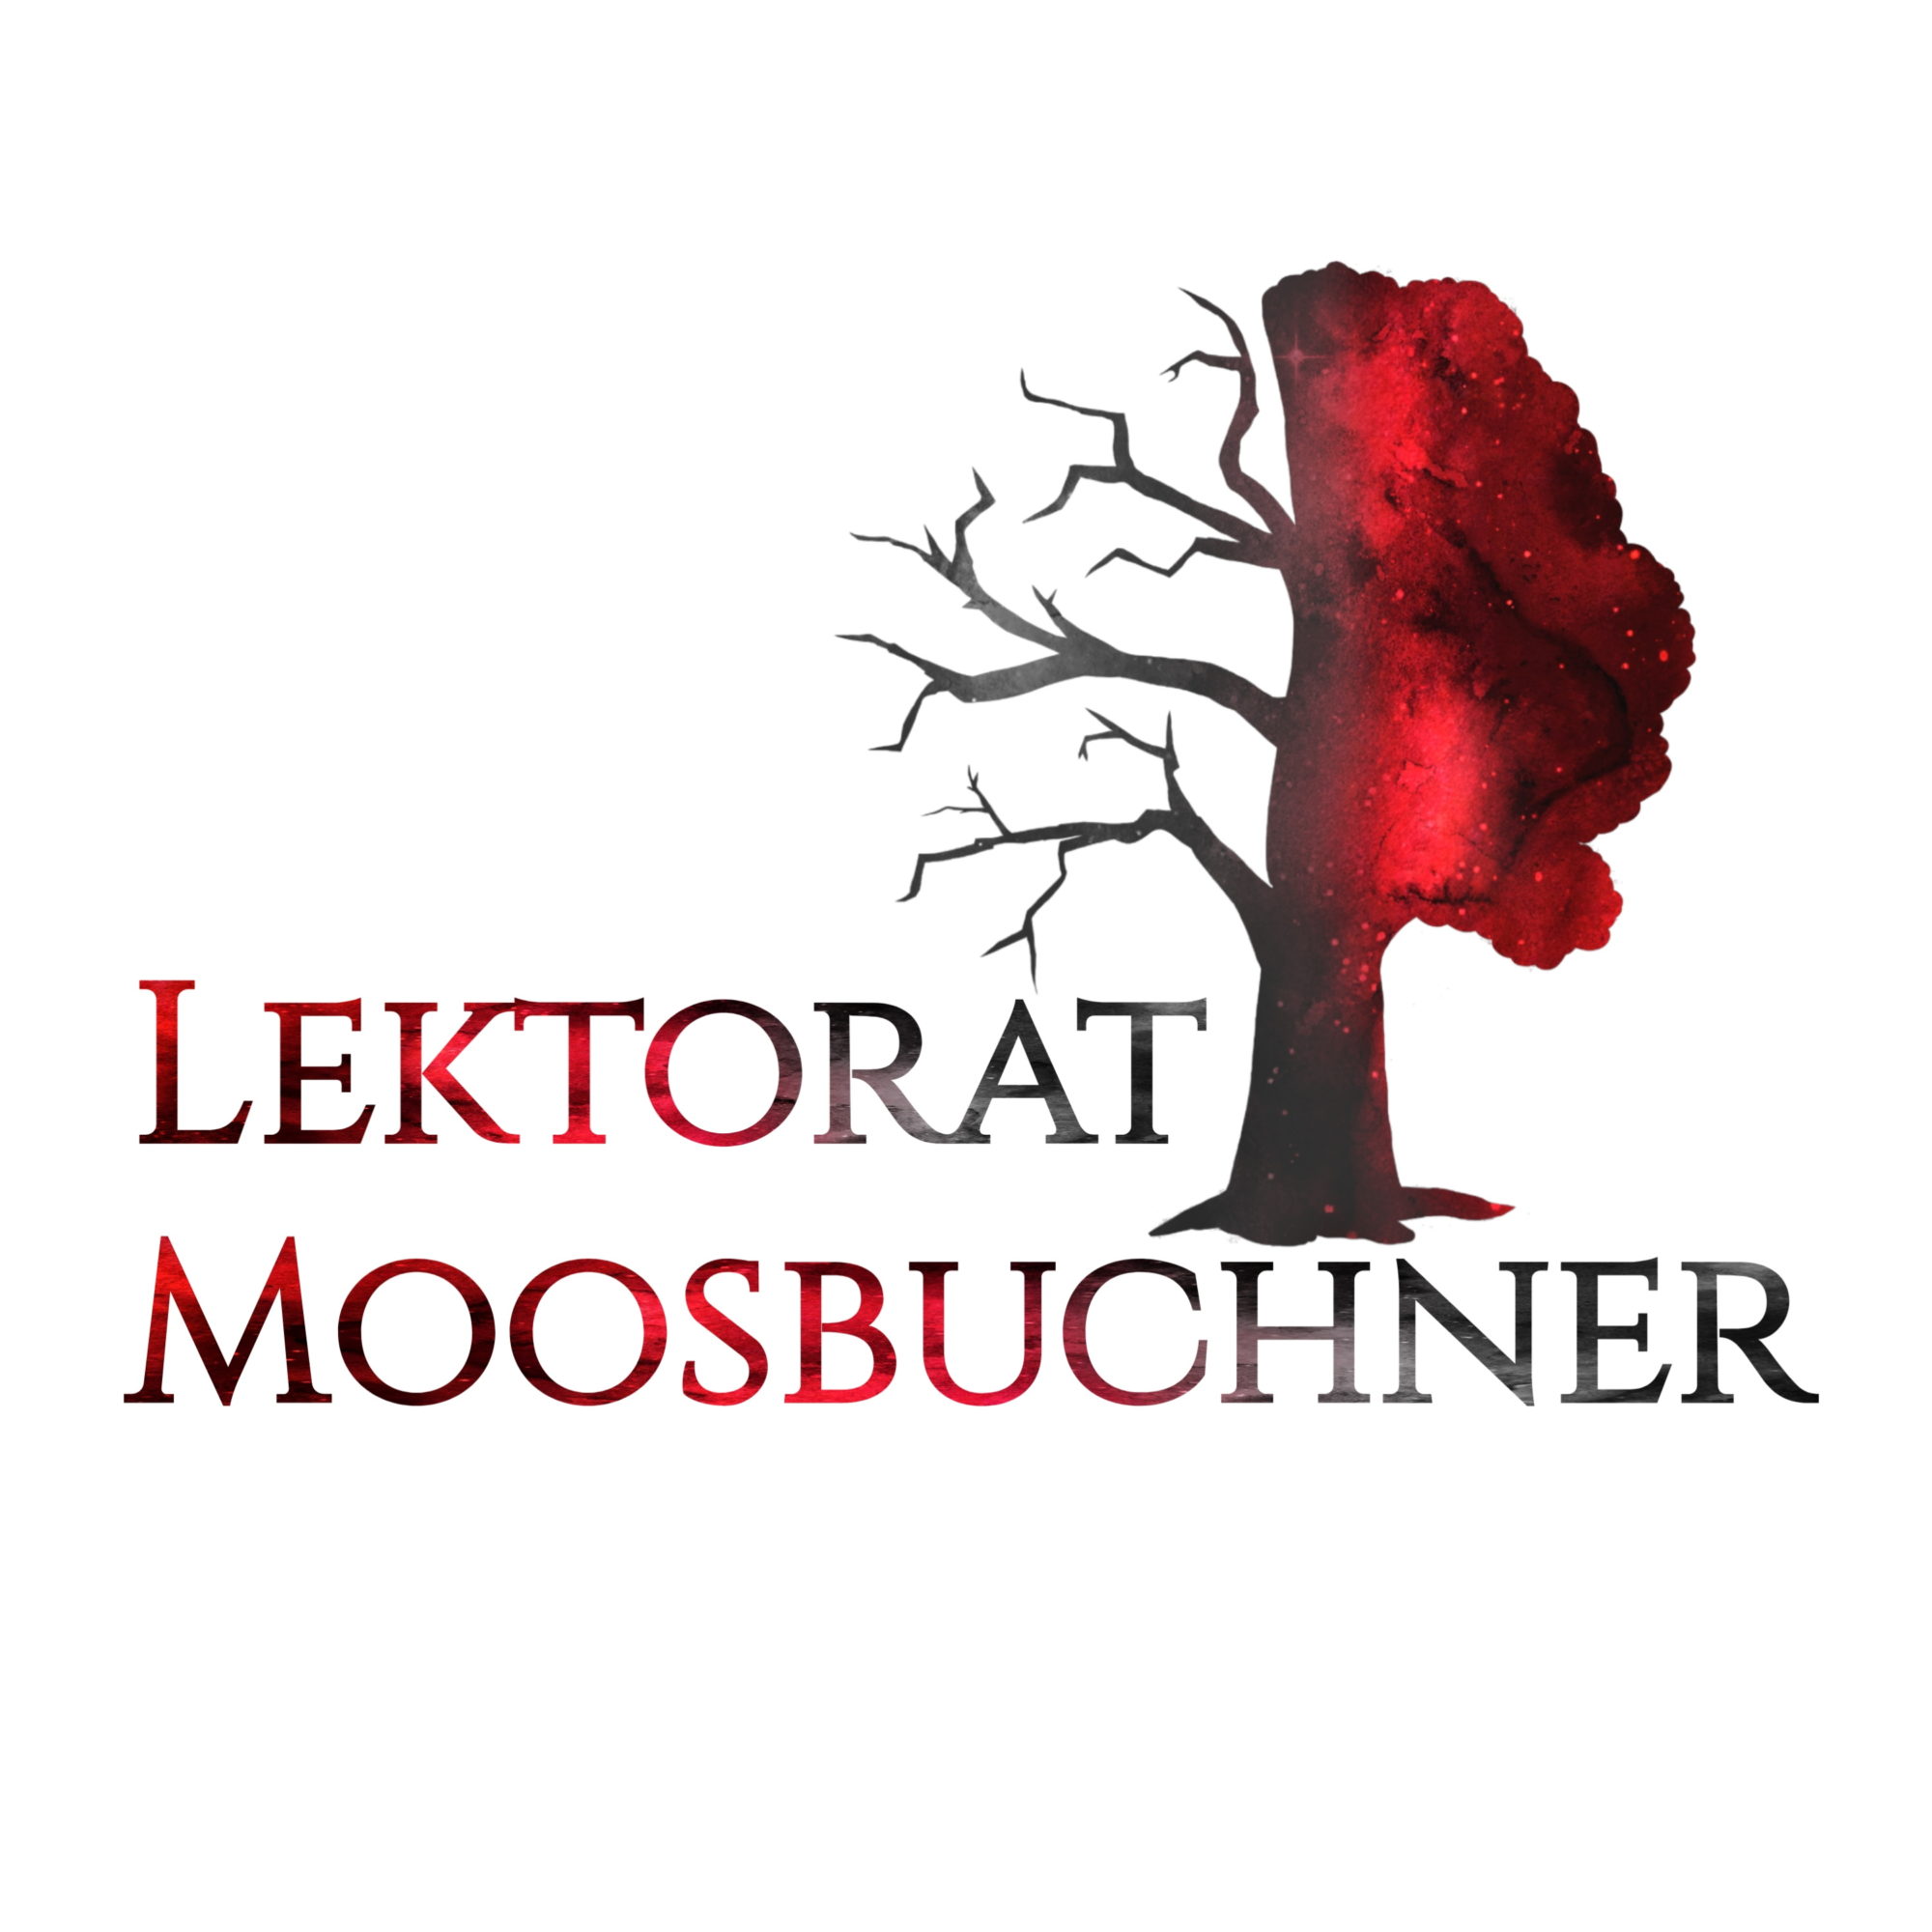 Lektorat Moosbuchner Logo 300dpi-0d7b7619